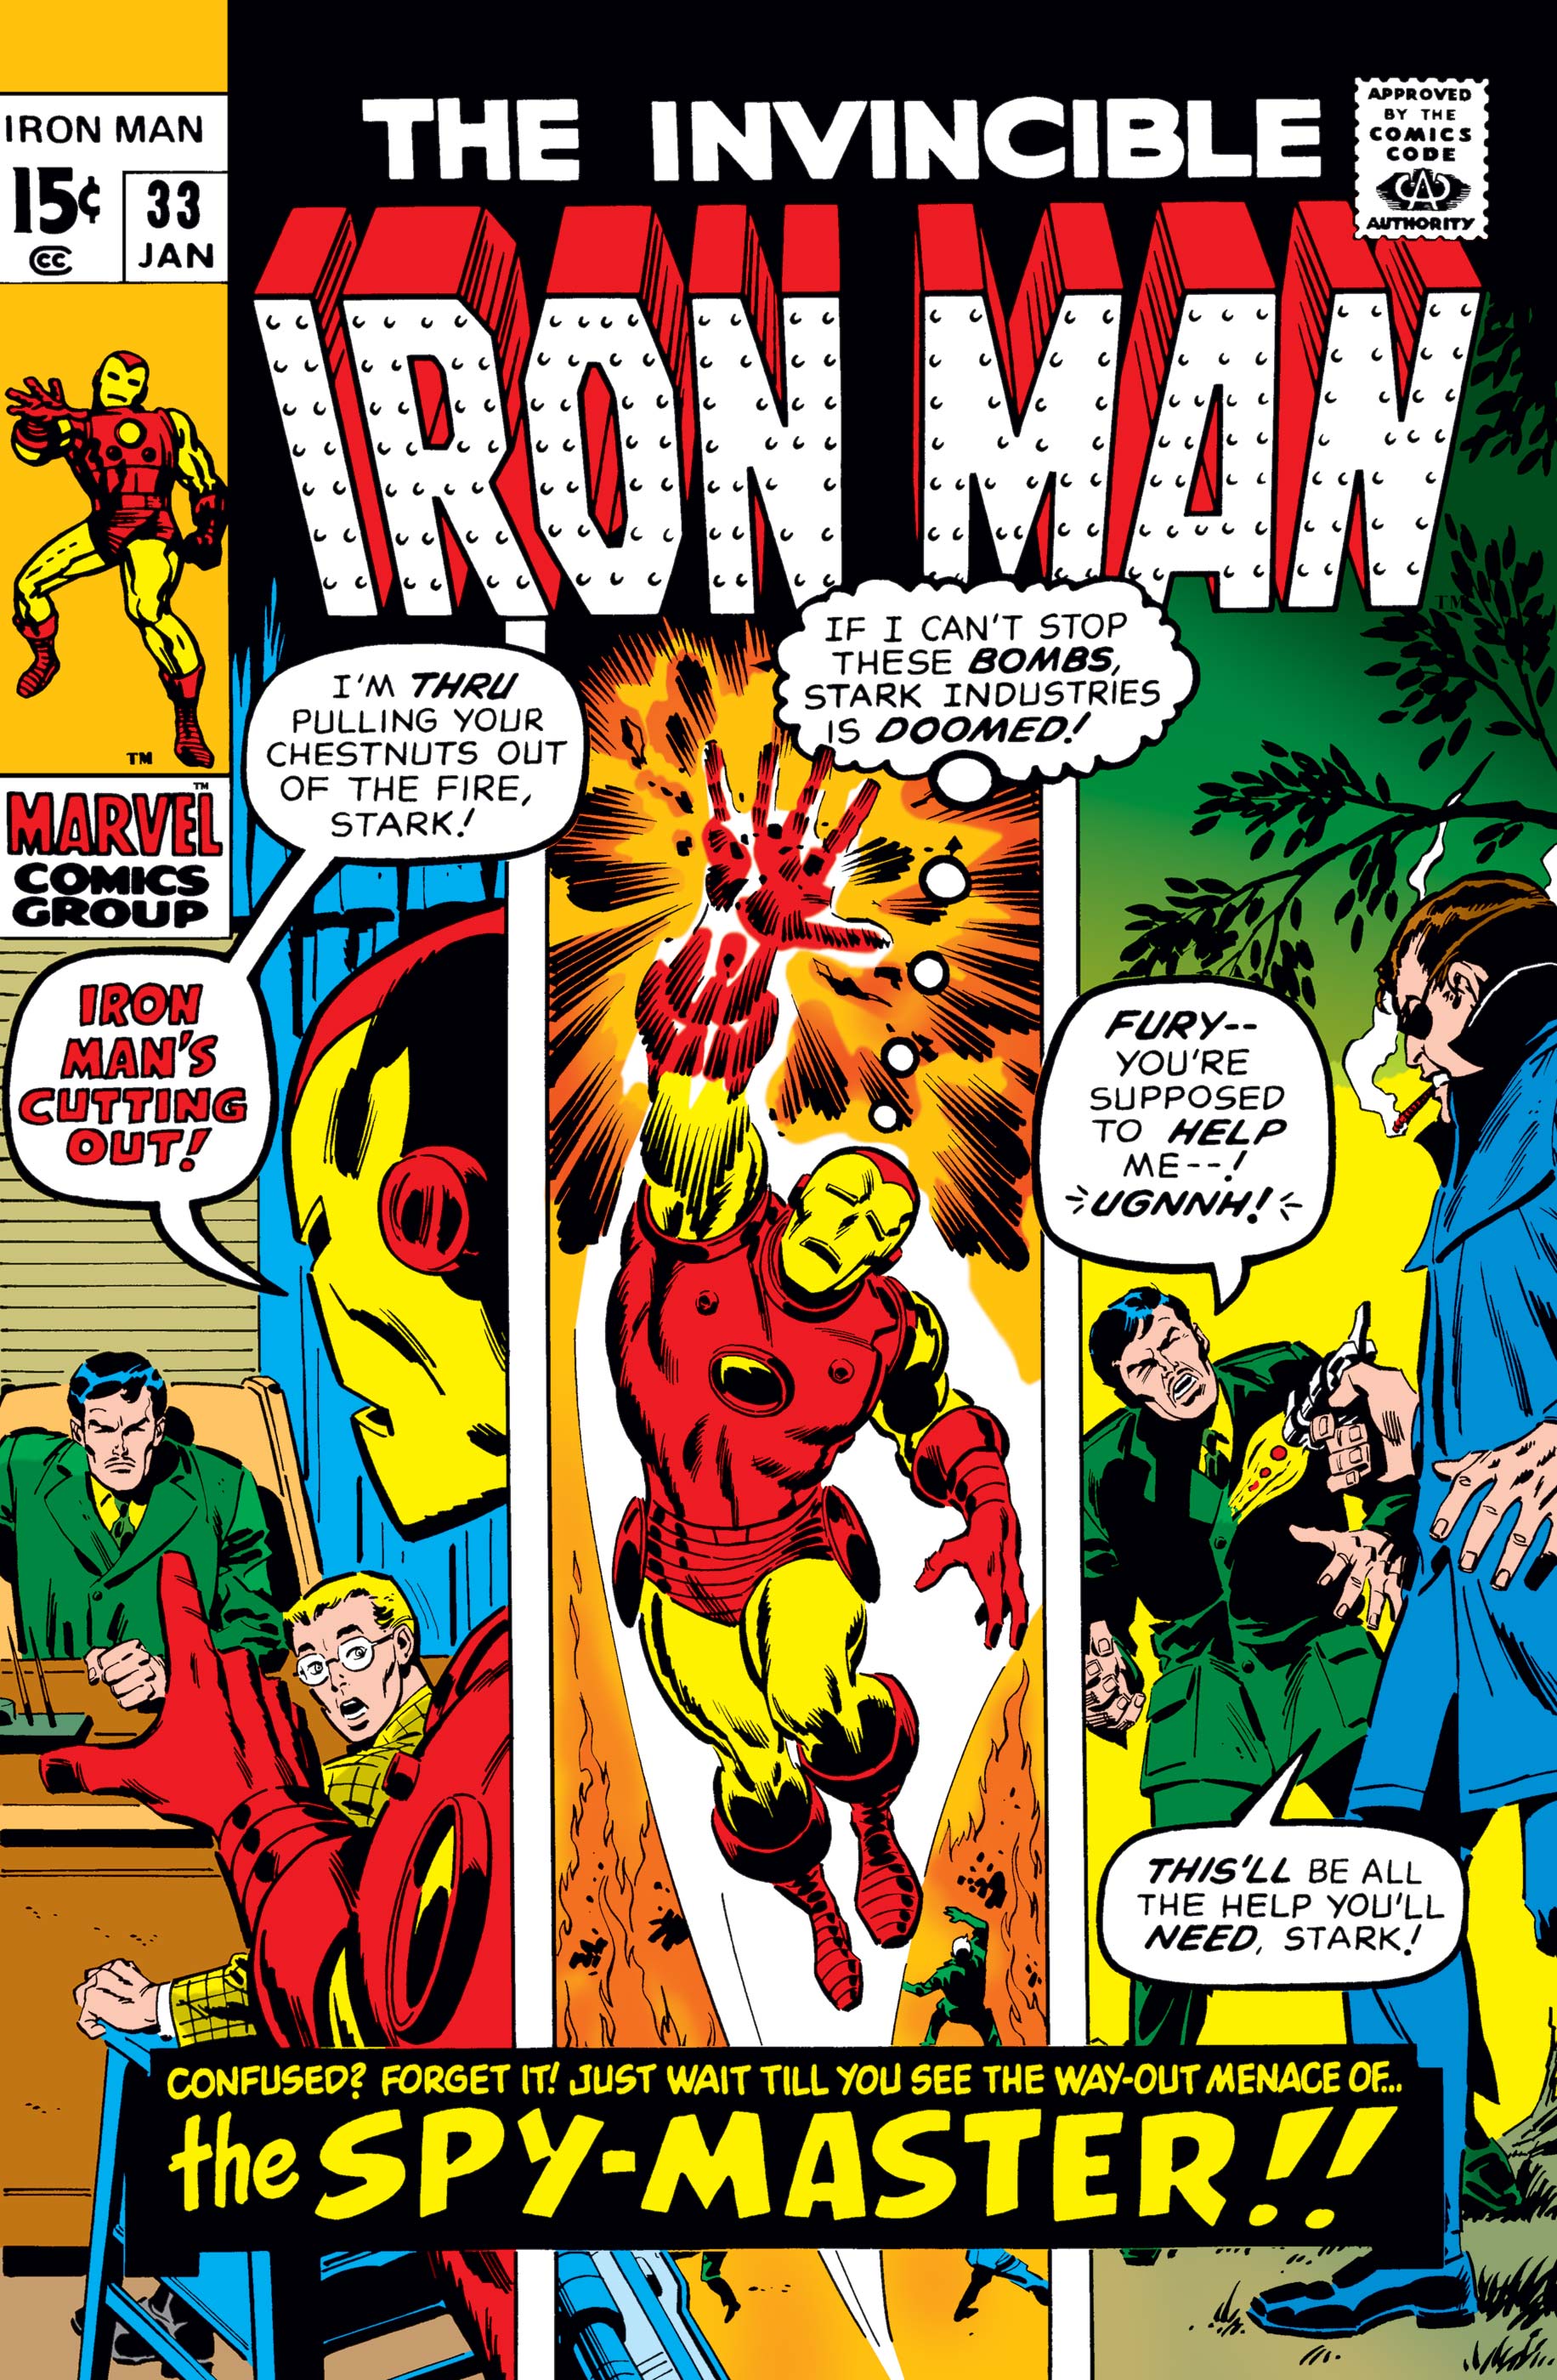 Iron Man (1968) #33